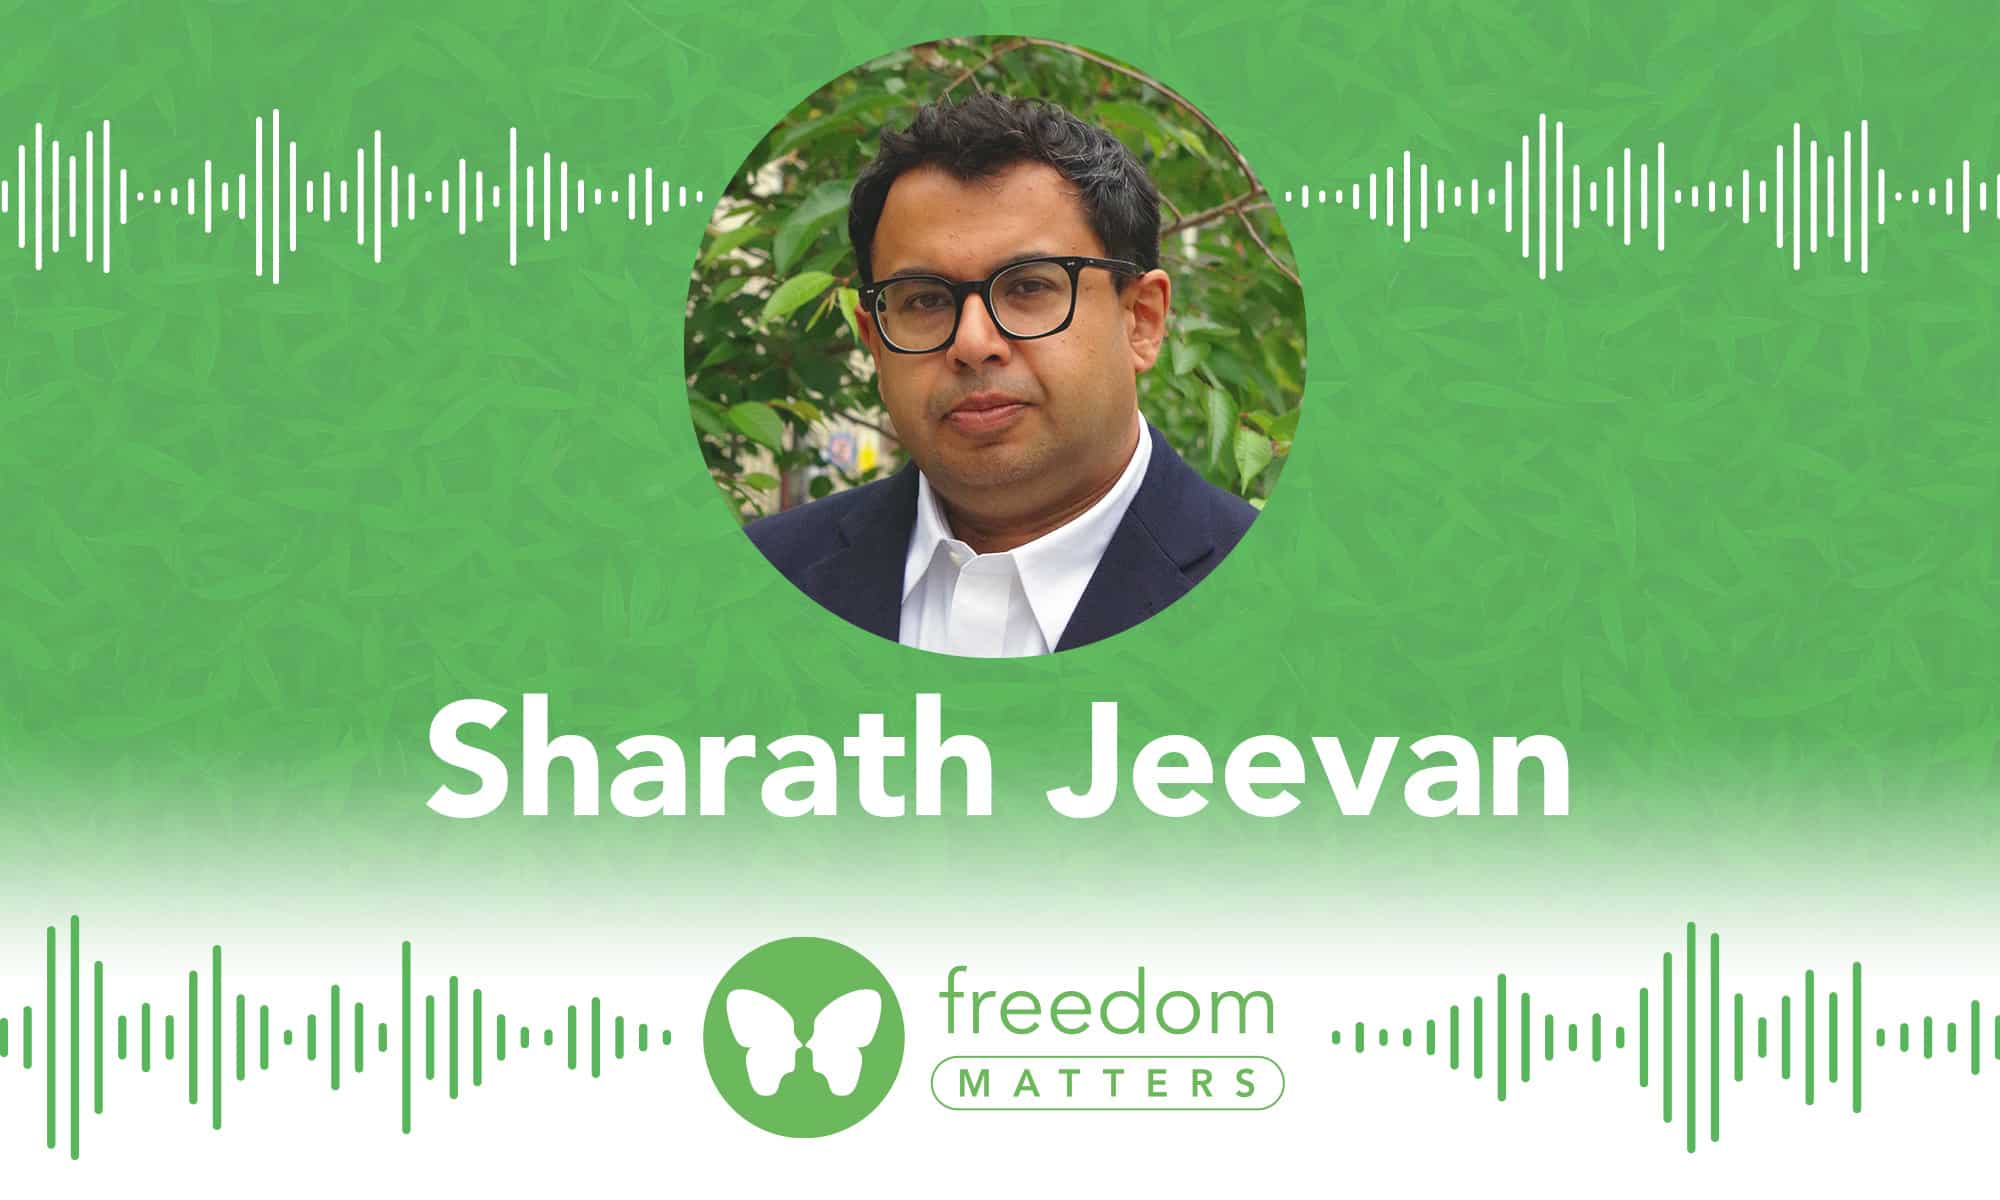 Sharath Jeevan Freedom Matters